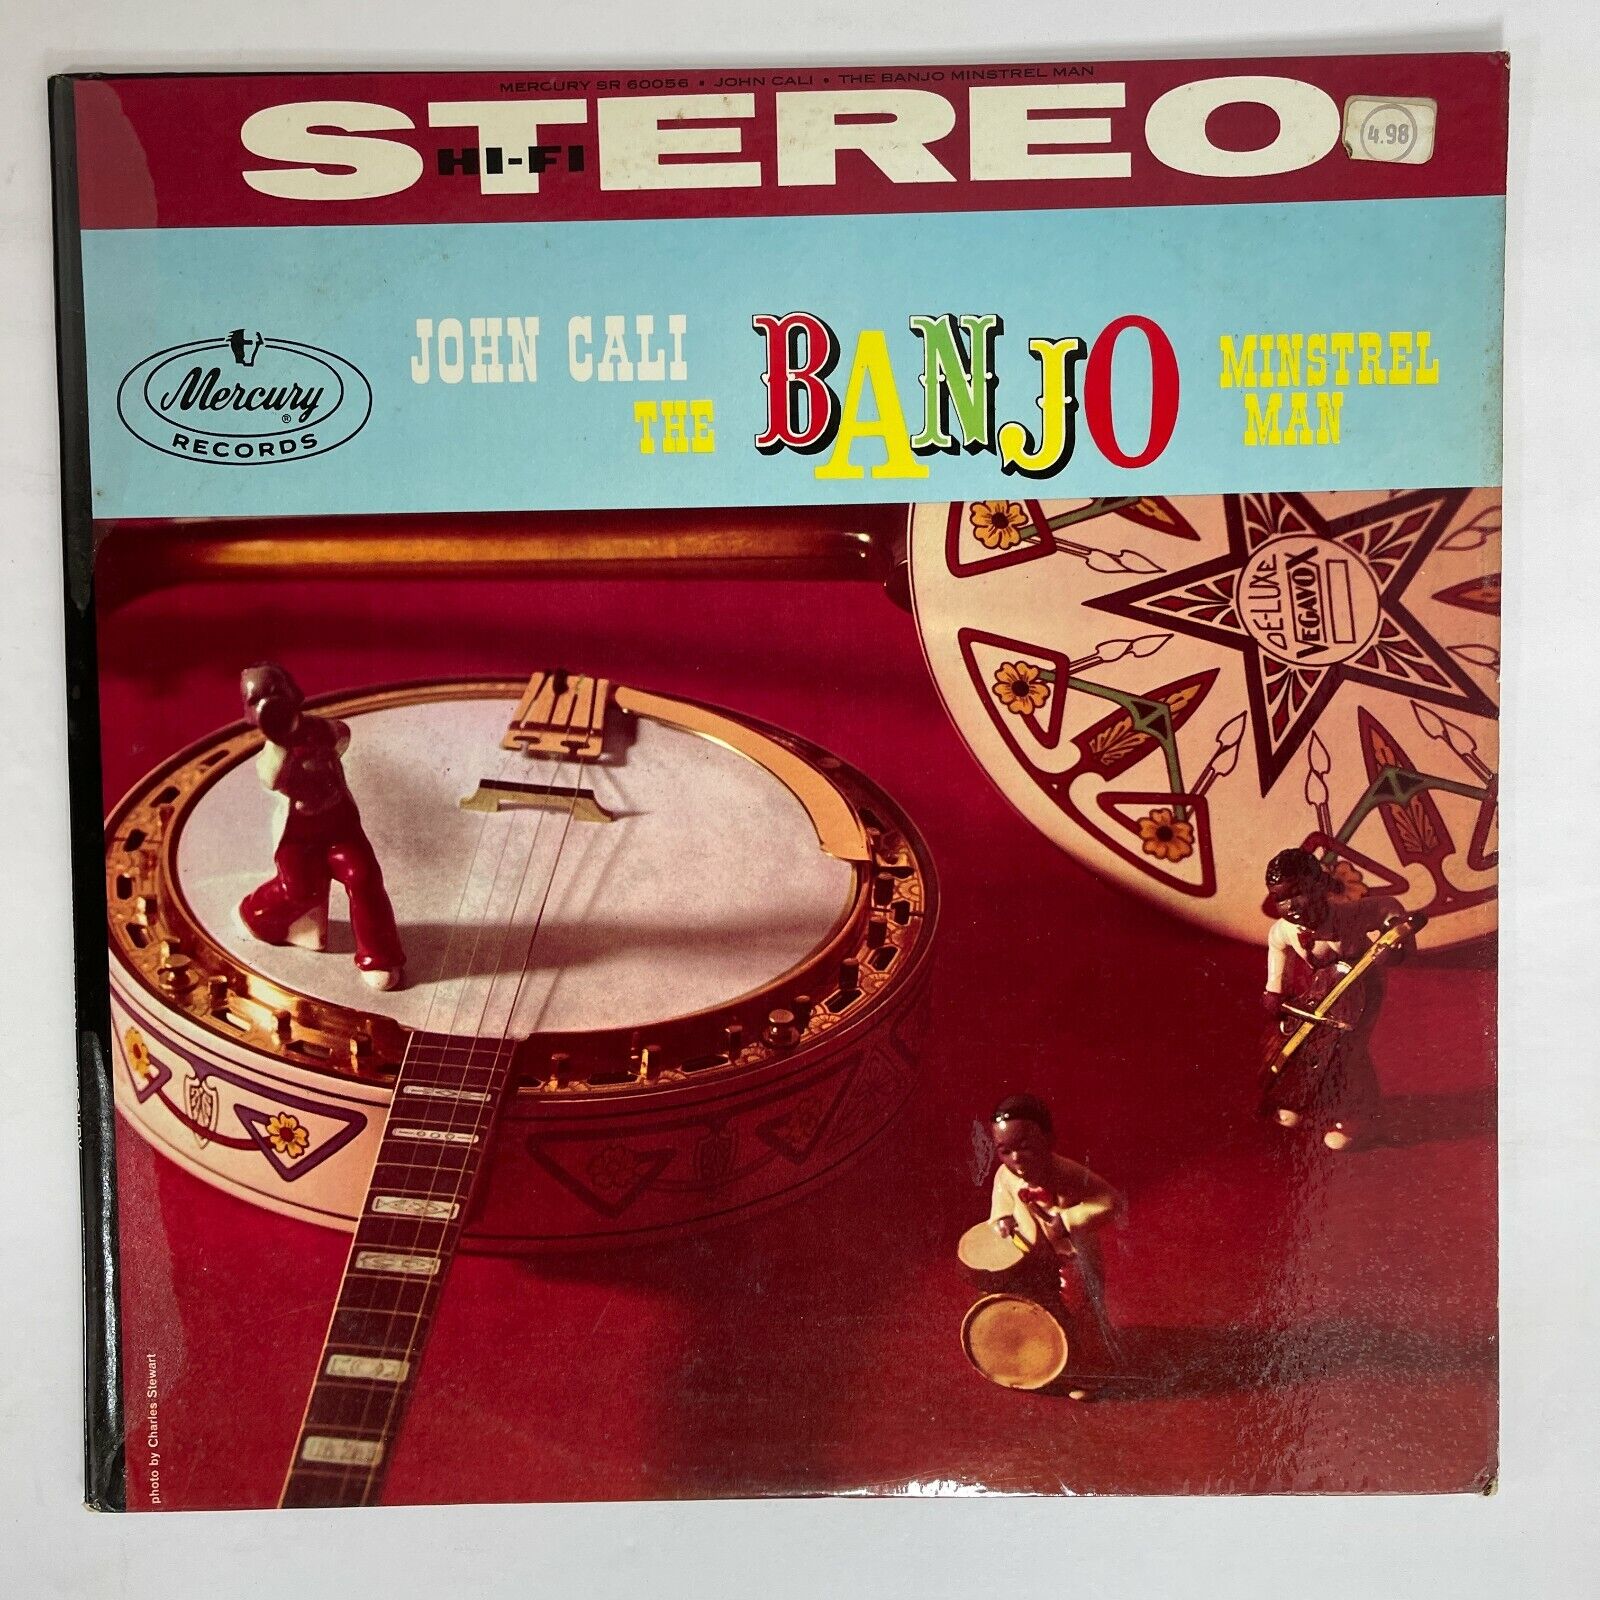 John Cali ‎– The Banjo Minstrel Man Vinyl, LP 1958 Mercury ‎– SR 60056 